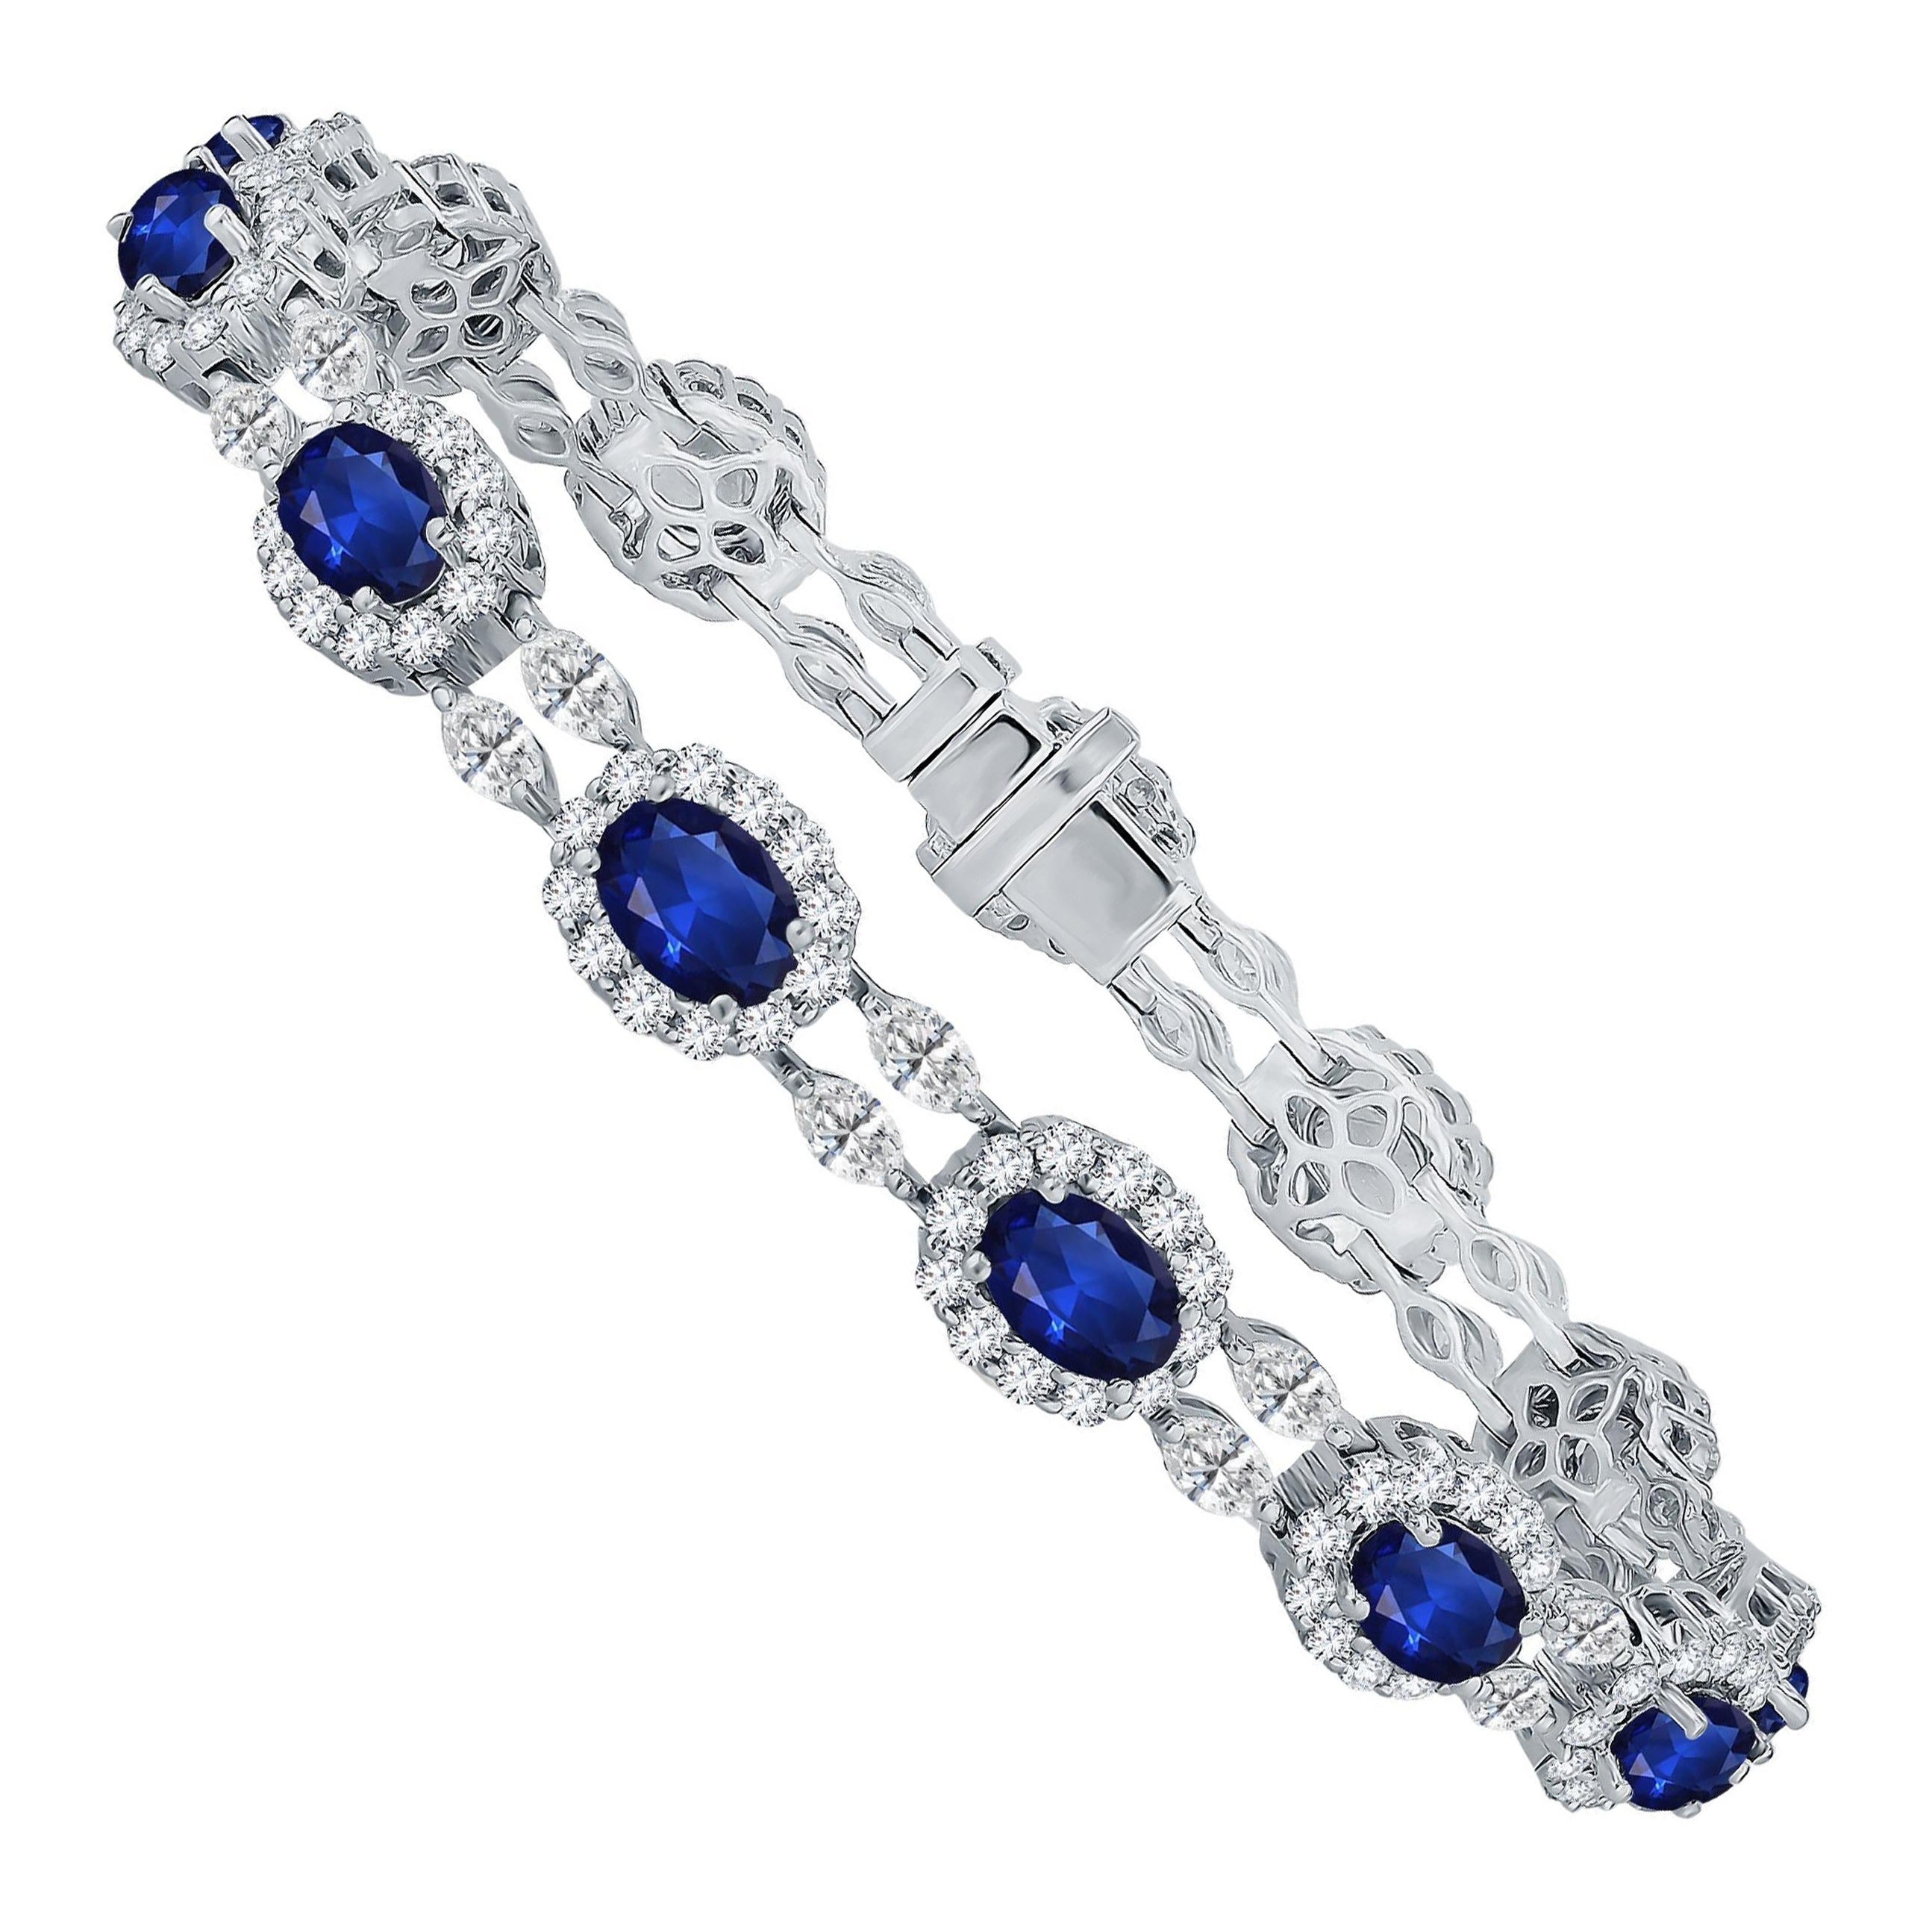 9.42 Carat Vivid Blue Oval Cut Sapphire and 3.94 Carat Diamond Bracelet ref363 For Sale